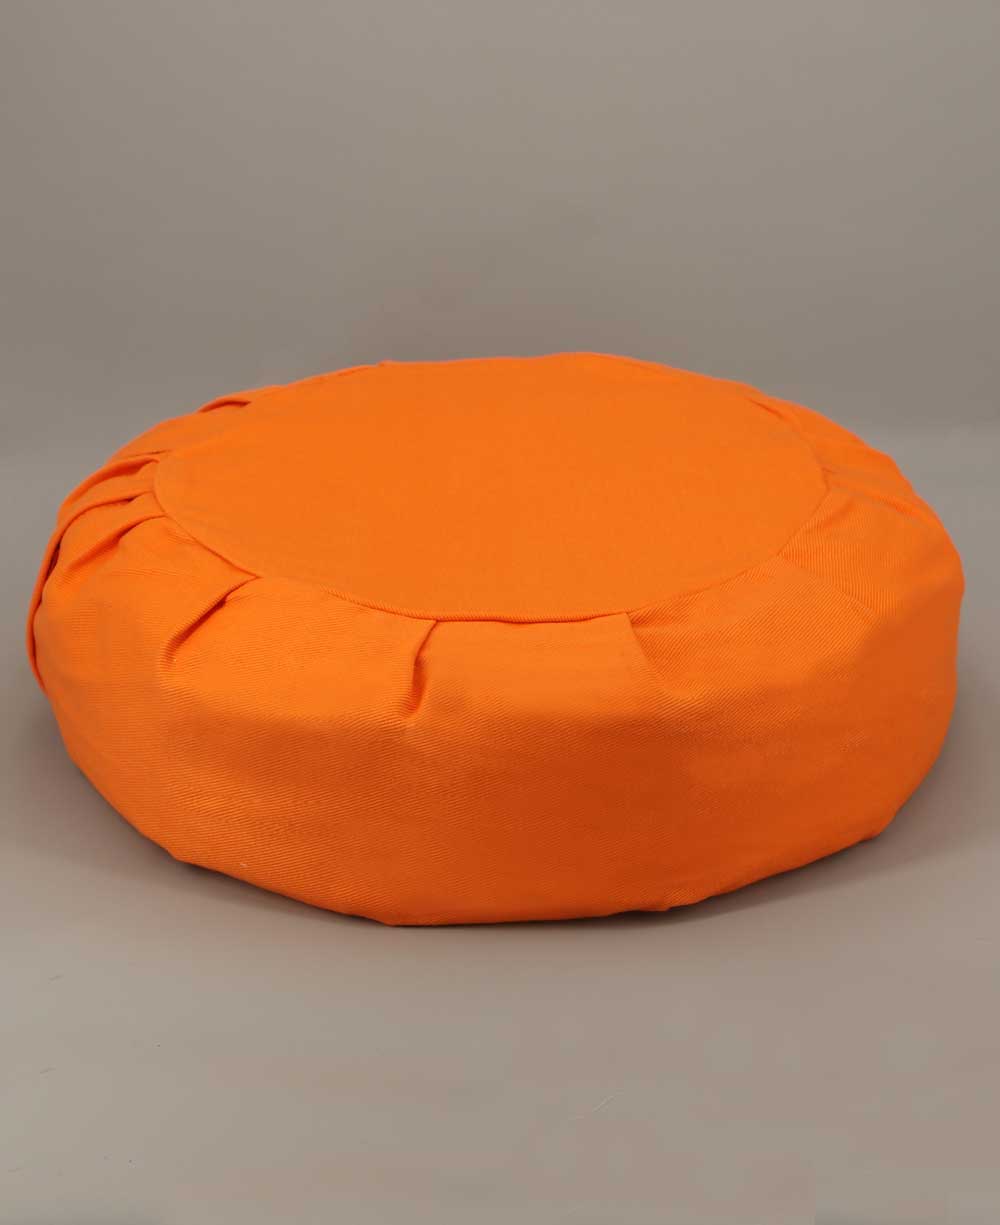 Twill Weave Zafu Meditation Cushions - Massage Cushions Navy